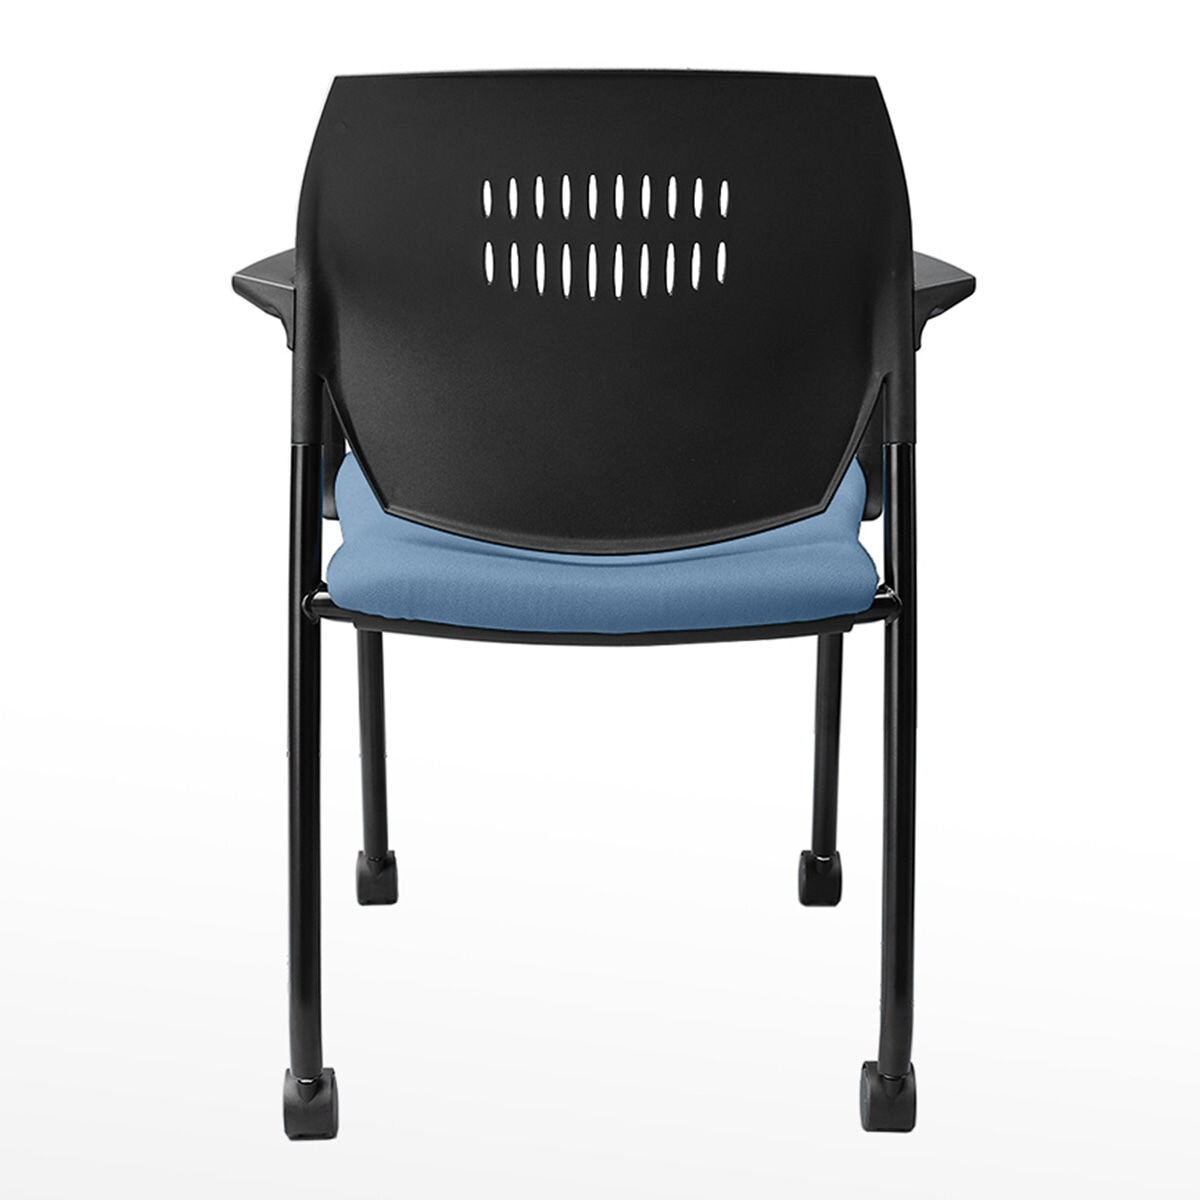 Musical Chairs Impressa 輪型扶手訪客椅 藍